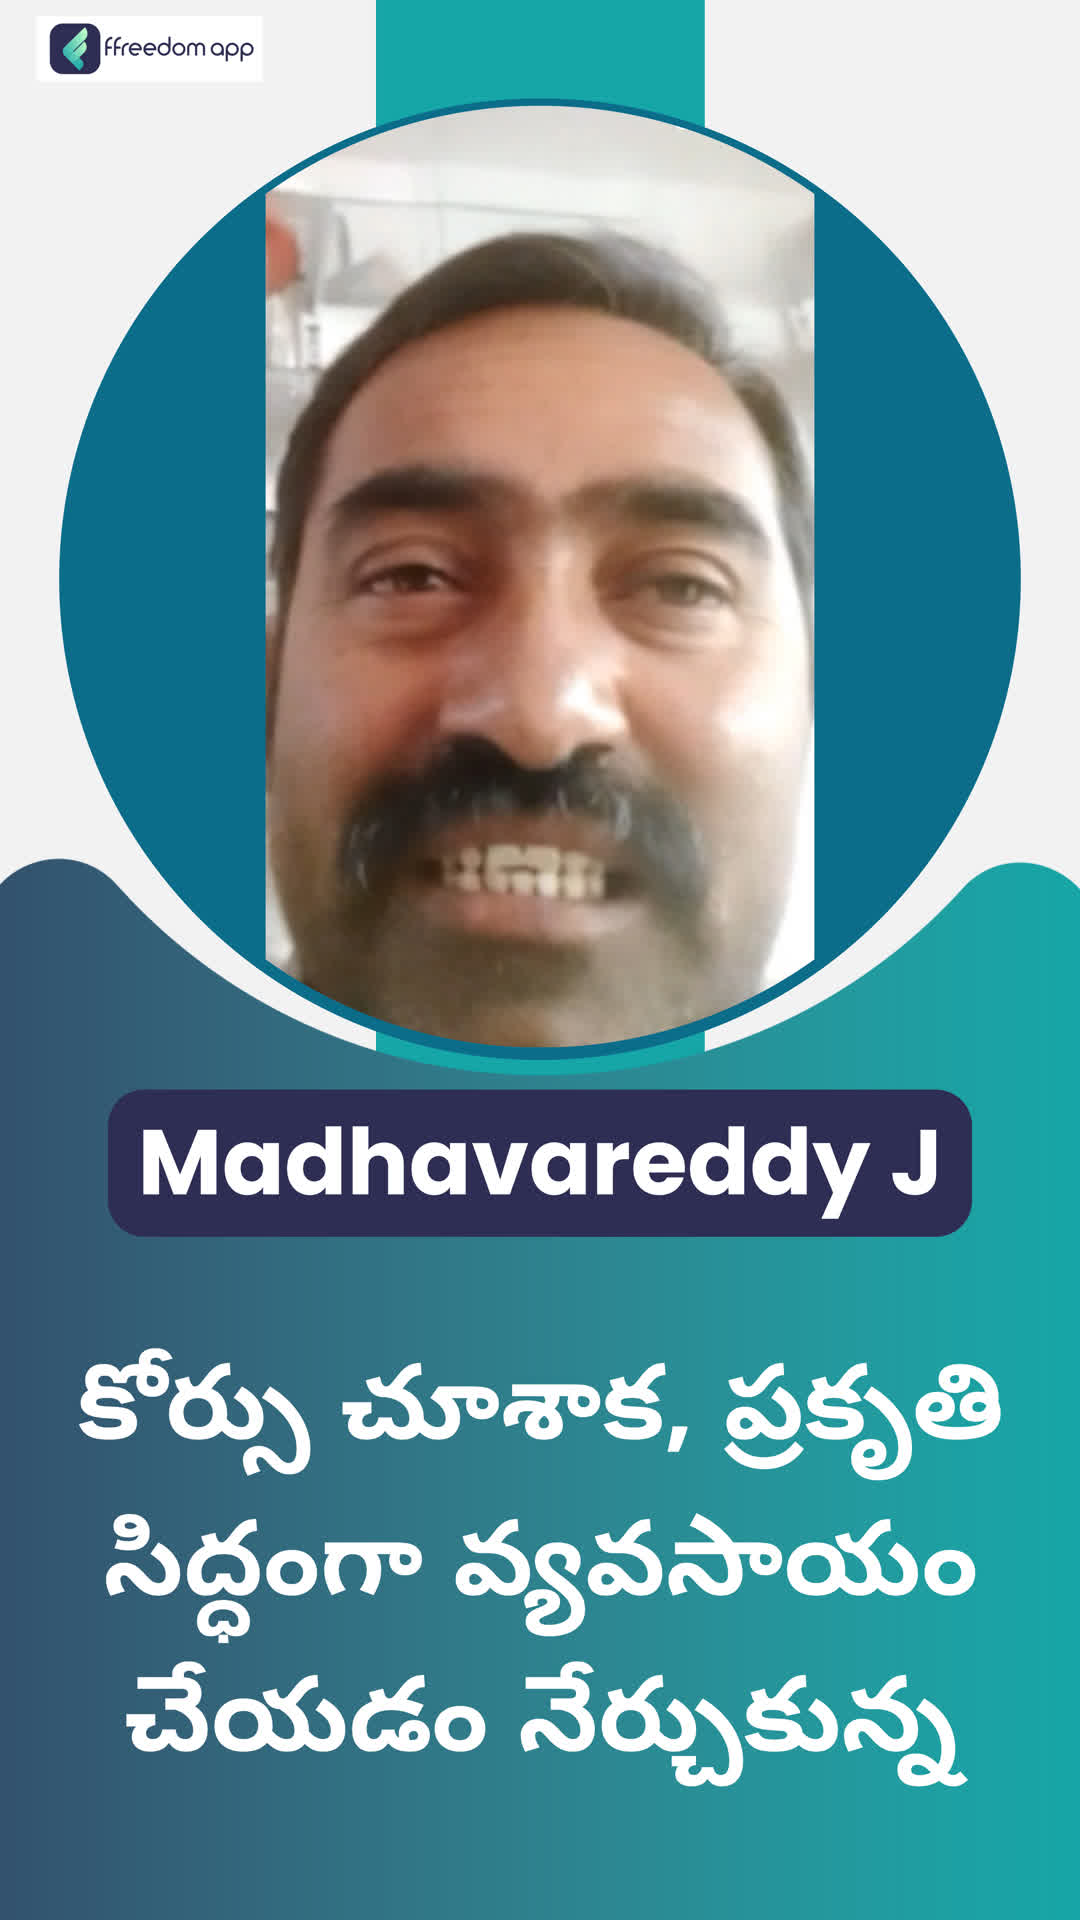 J Madhavareddy's Honest Review of ffreedom app - Anantapur ,Karnataka